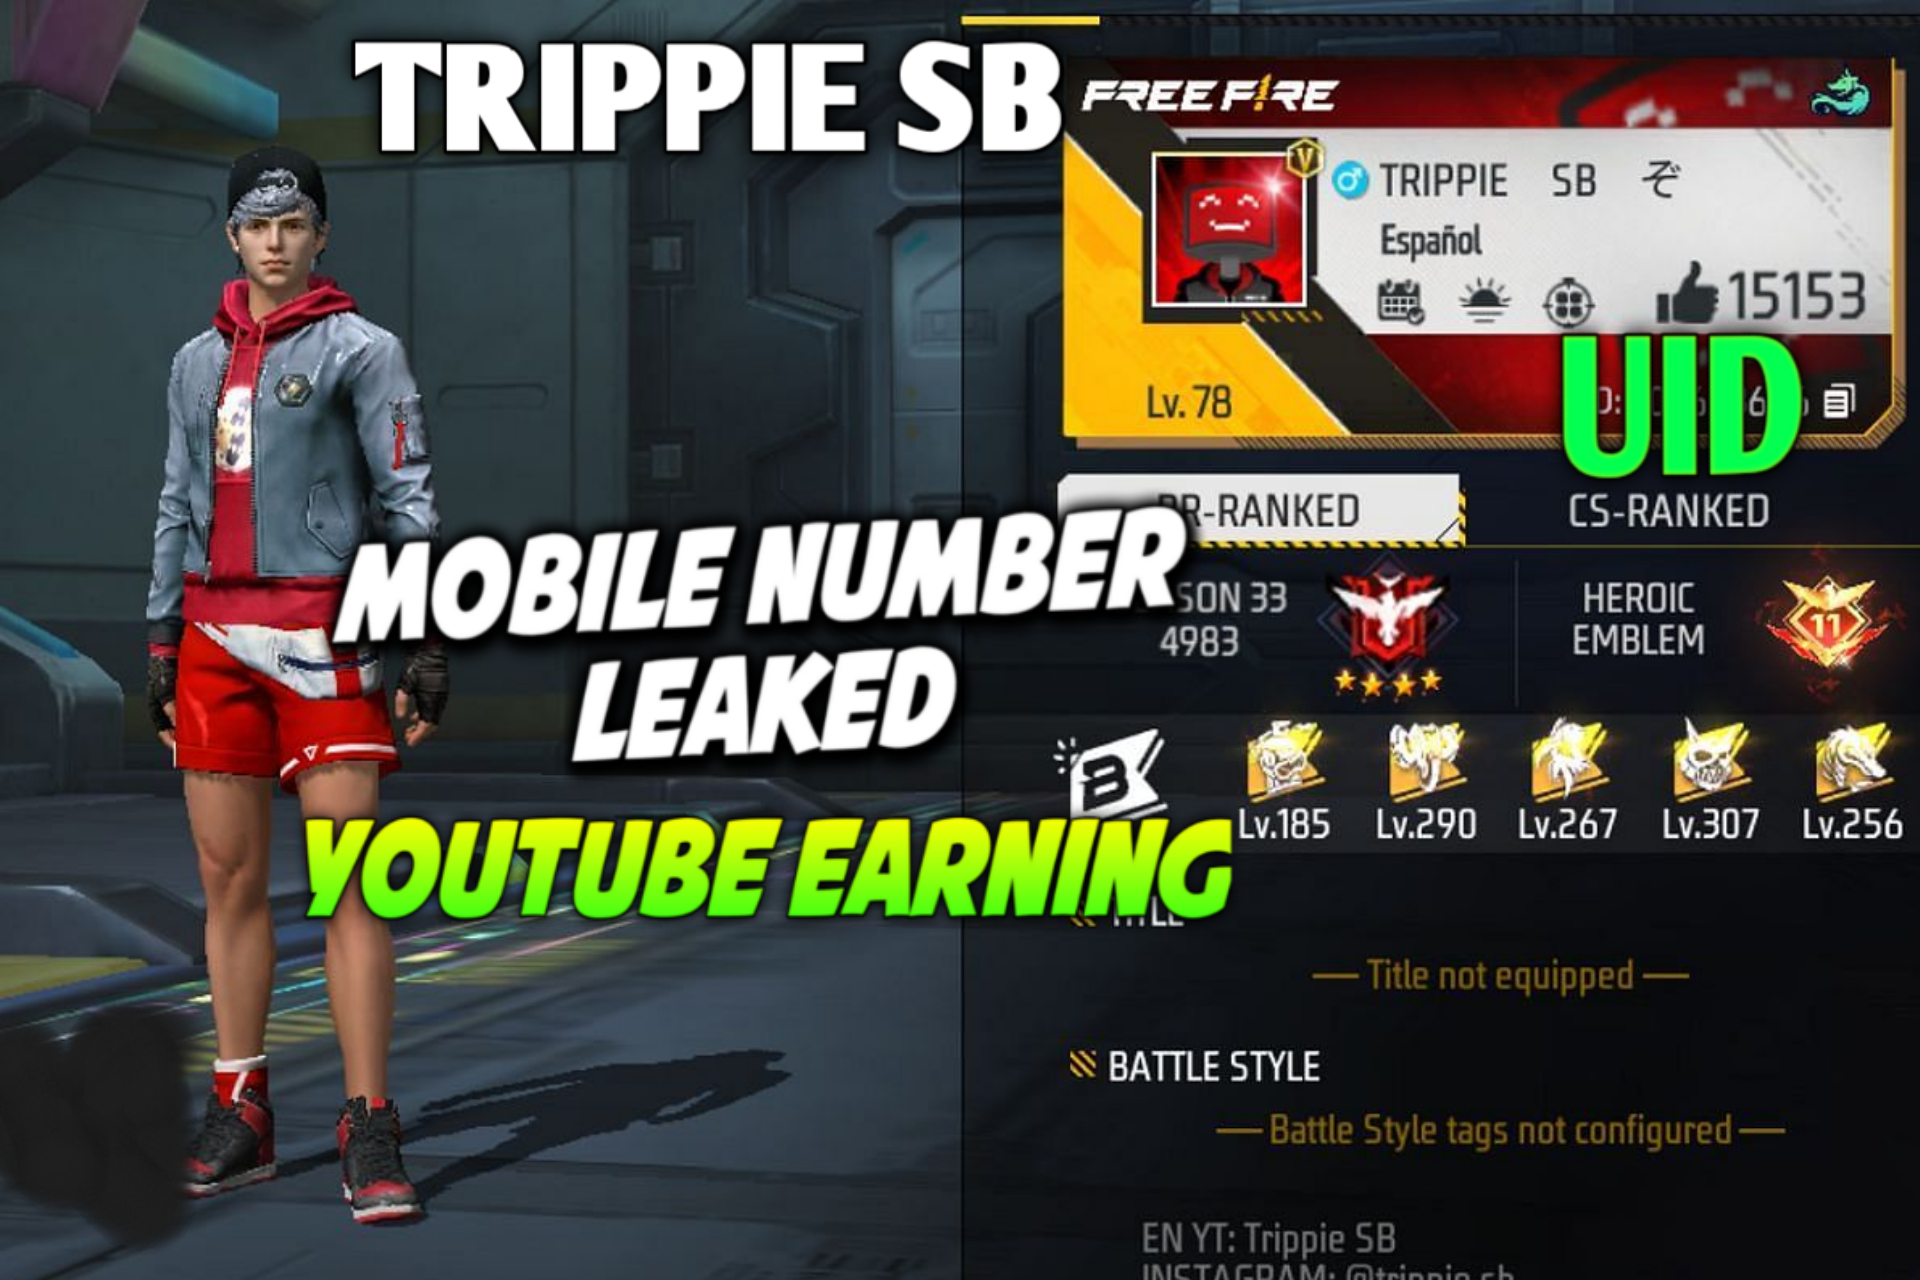 Trippie Sb Free Fire